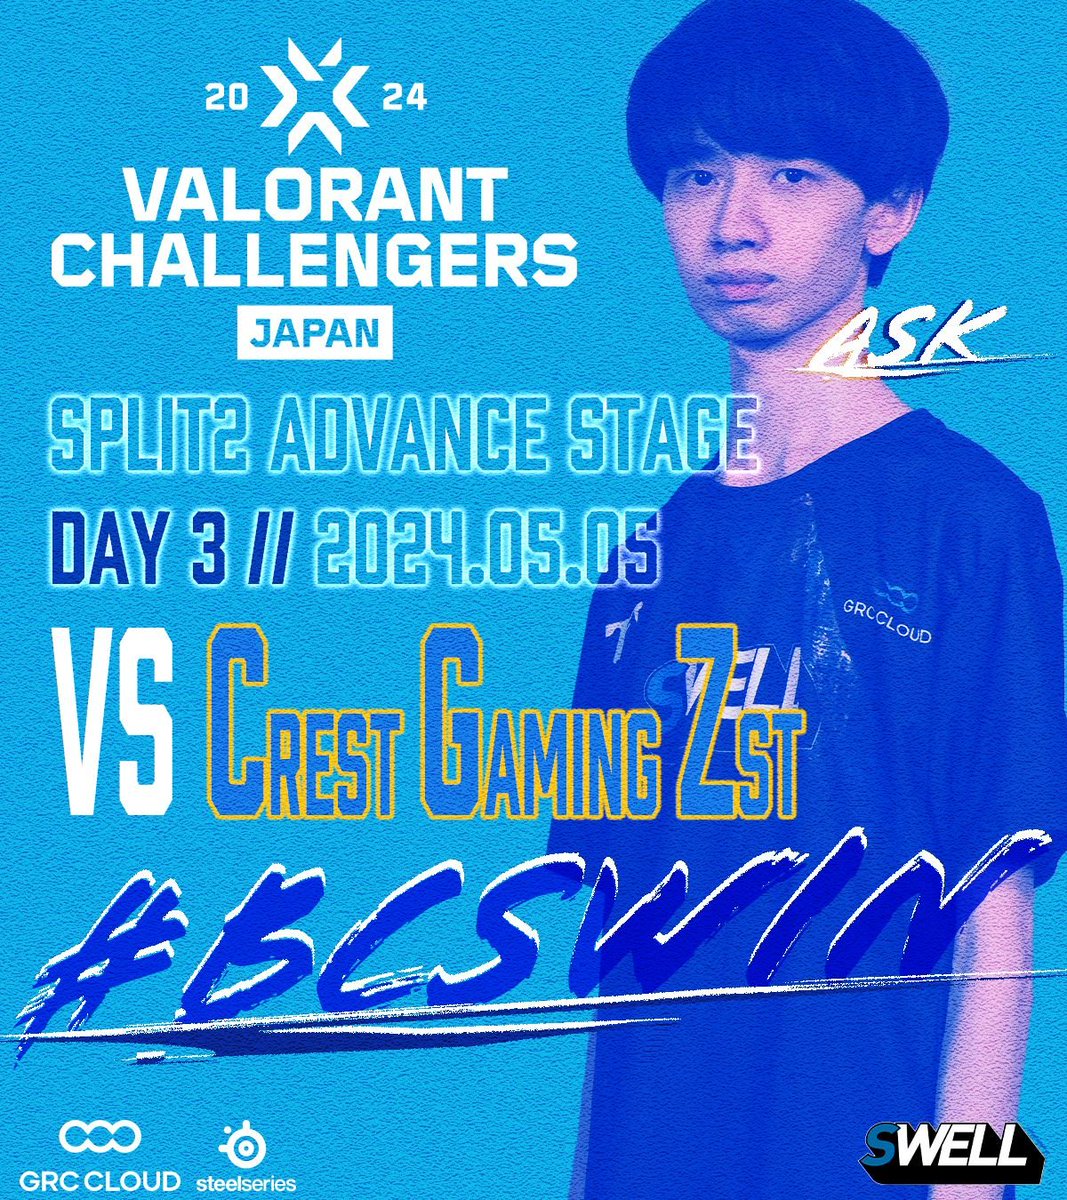 ⠀
\    #VALORANT  Challengers Japan Split2    /

▍ 𝗔𝗱𝘃𝗮𝗻𝗰𝗲 𝗦𝘁𝗮𝗴𝗲 𝗗𝗮𝘆 𝟯  🆚  @crest_gaming  

 ────────────────────

LET'S GO!! BCS  応援よろしくお願いします 📣

▍ #ChallengersJP   #BCSWIN   🌊 ´-
⠀